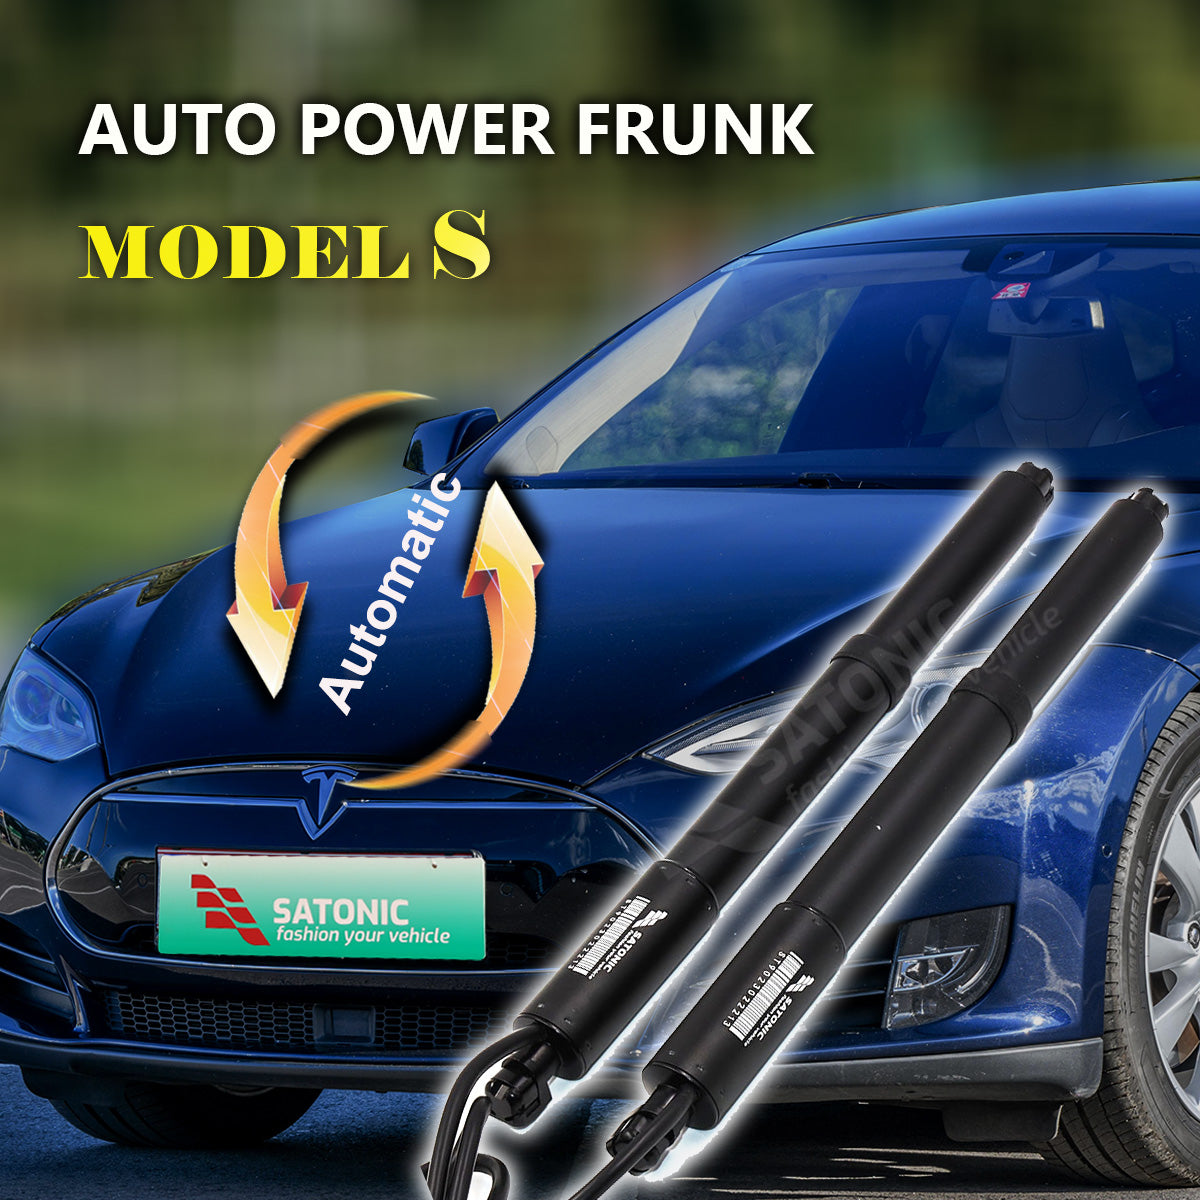 Model S Auto Power Frunk